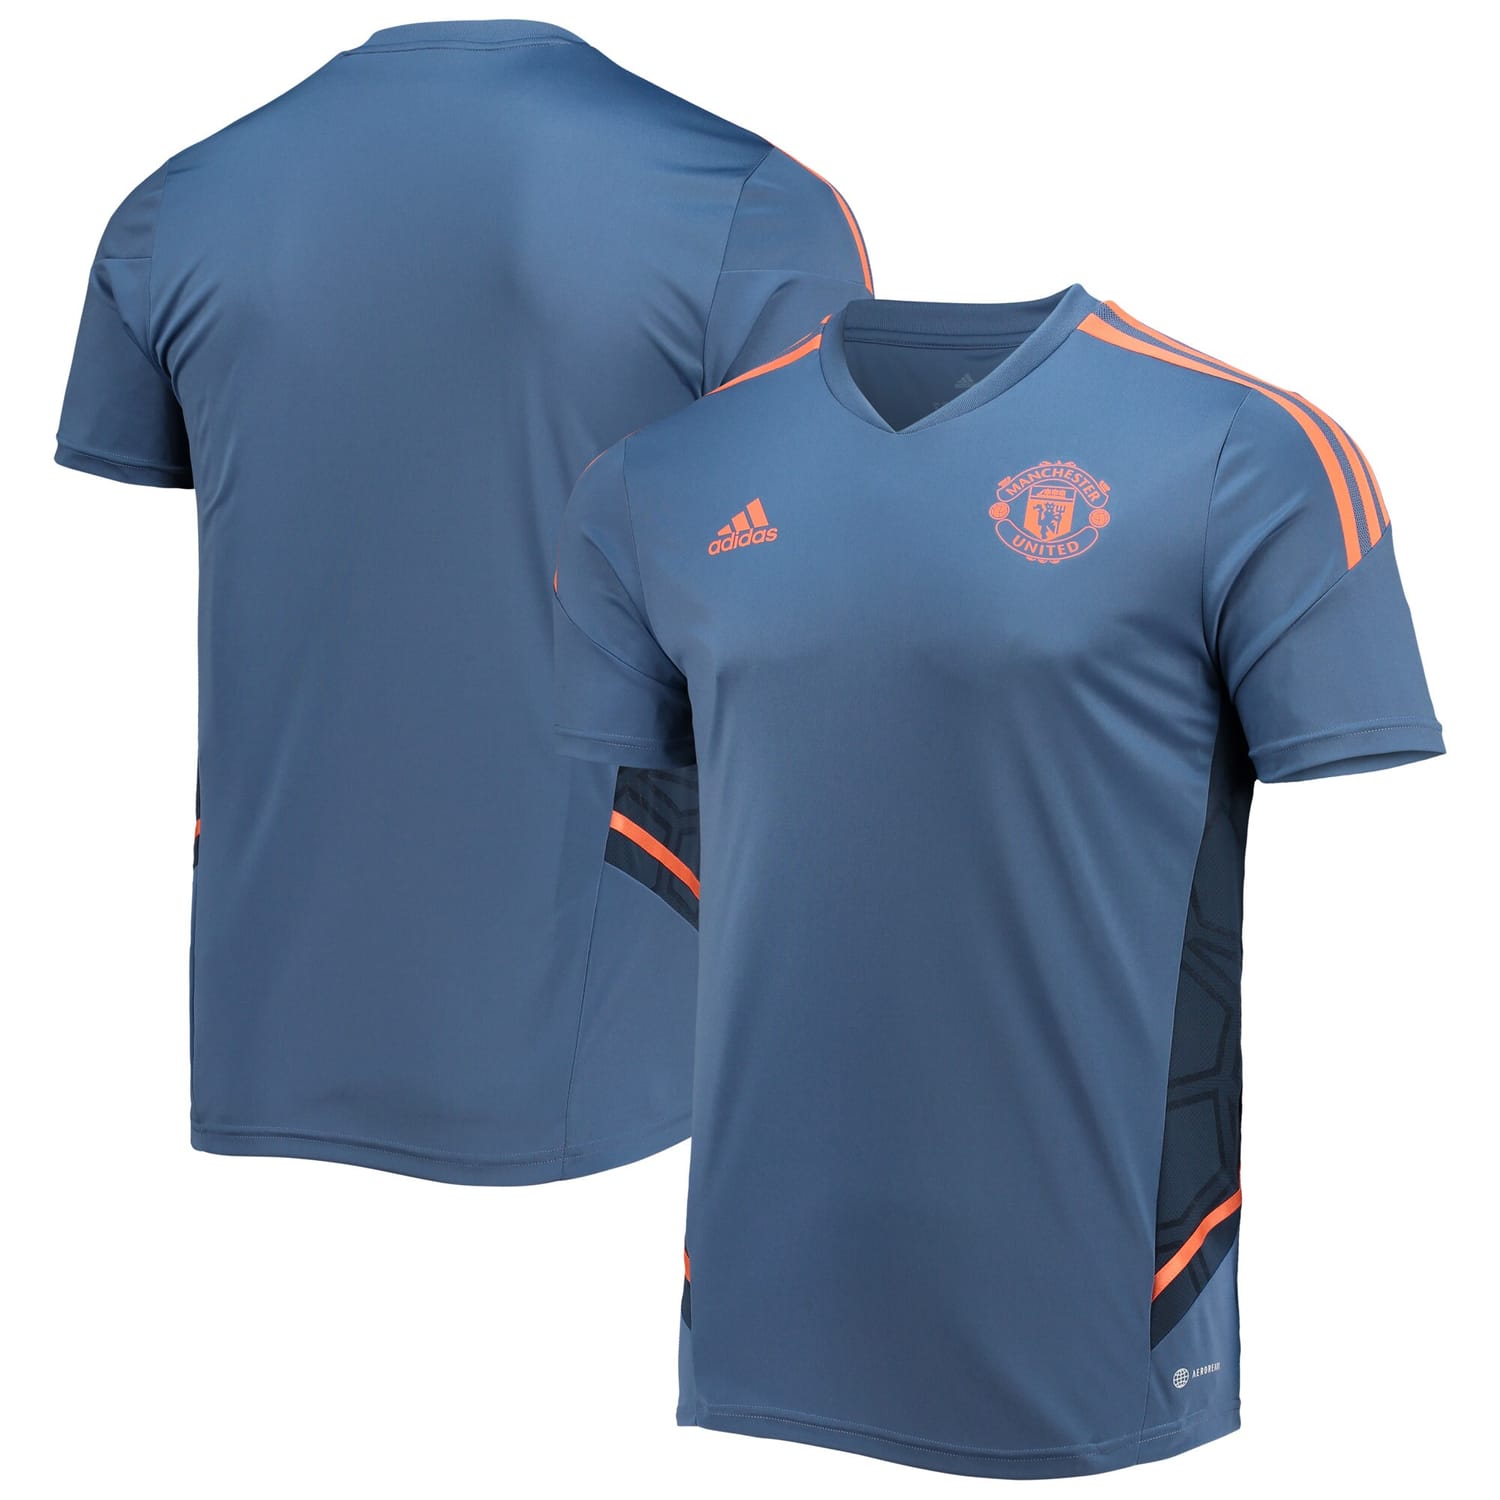 Premier League Manchester United Training Jersey Shirt Blue for Men